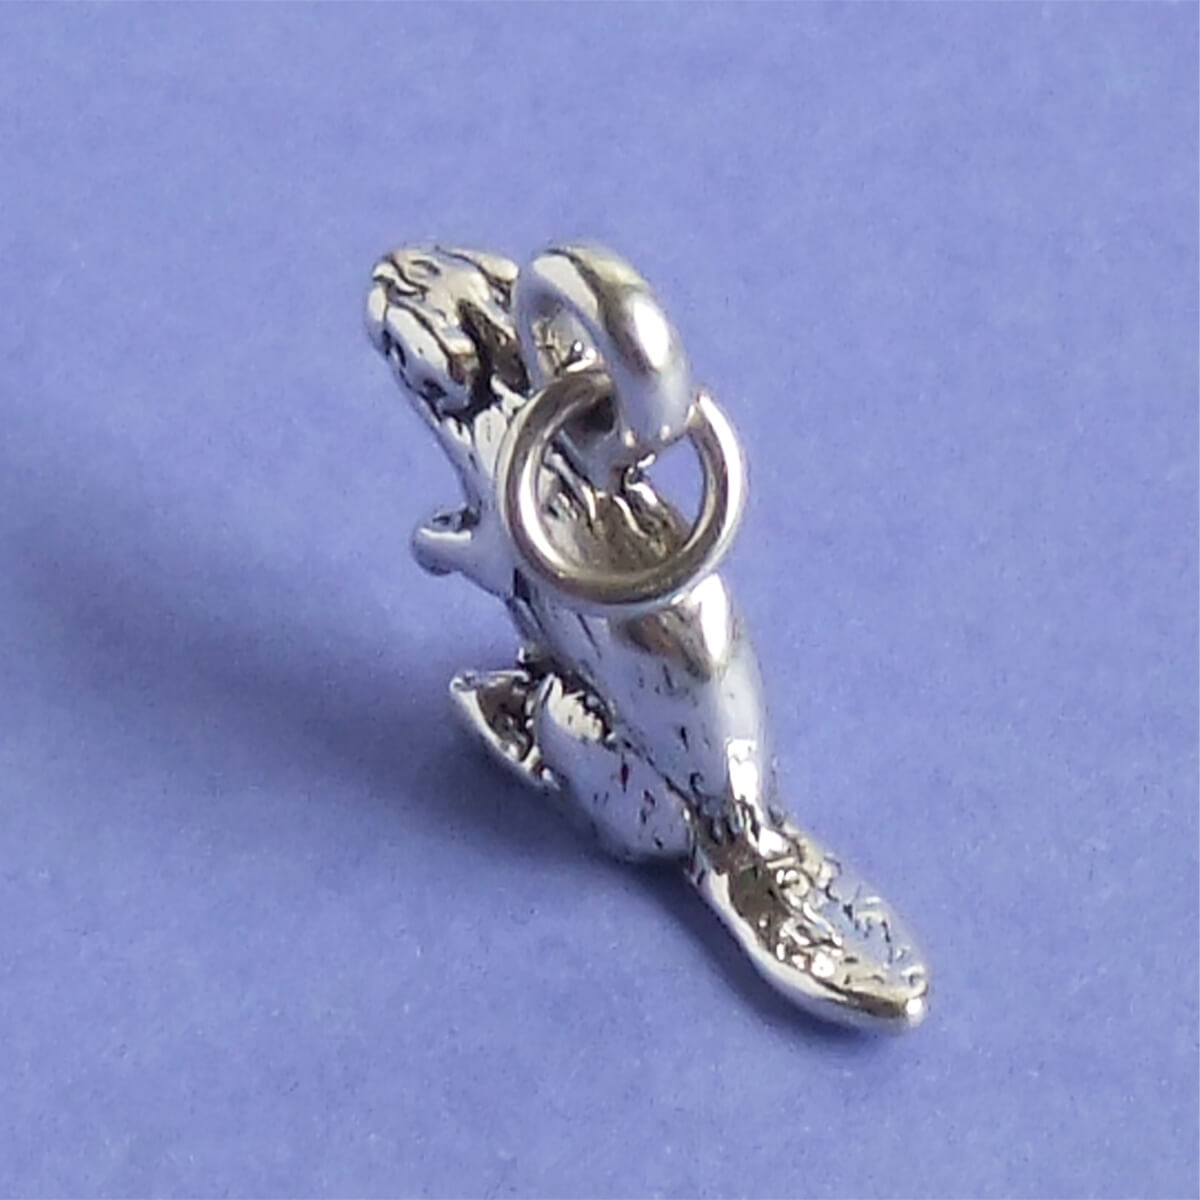 Beaver charm sterling silver animal pendant